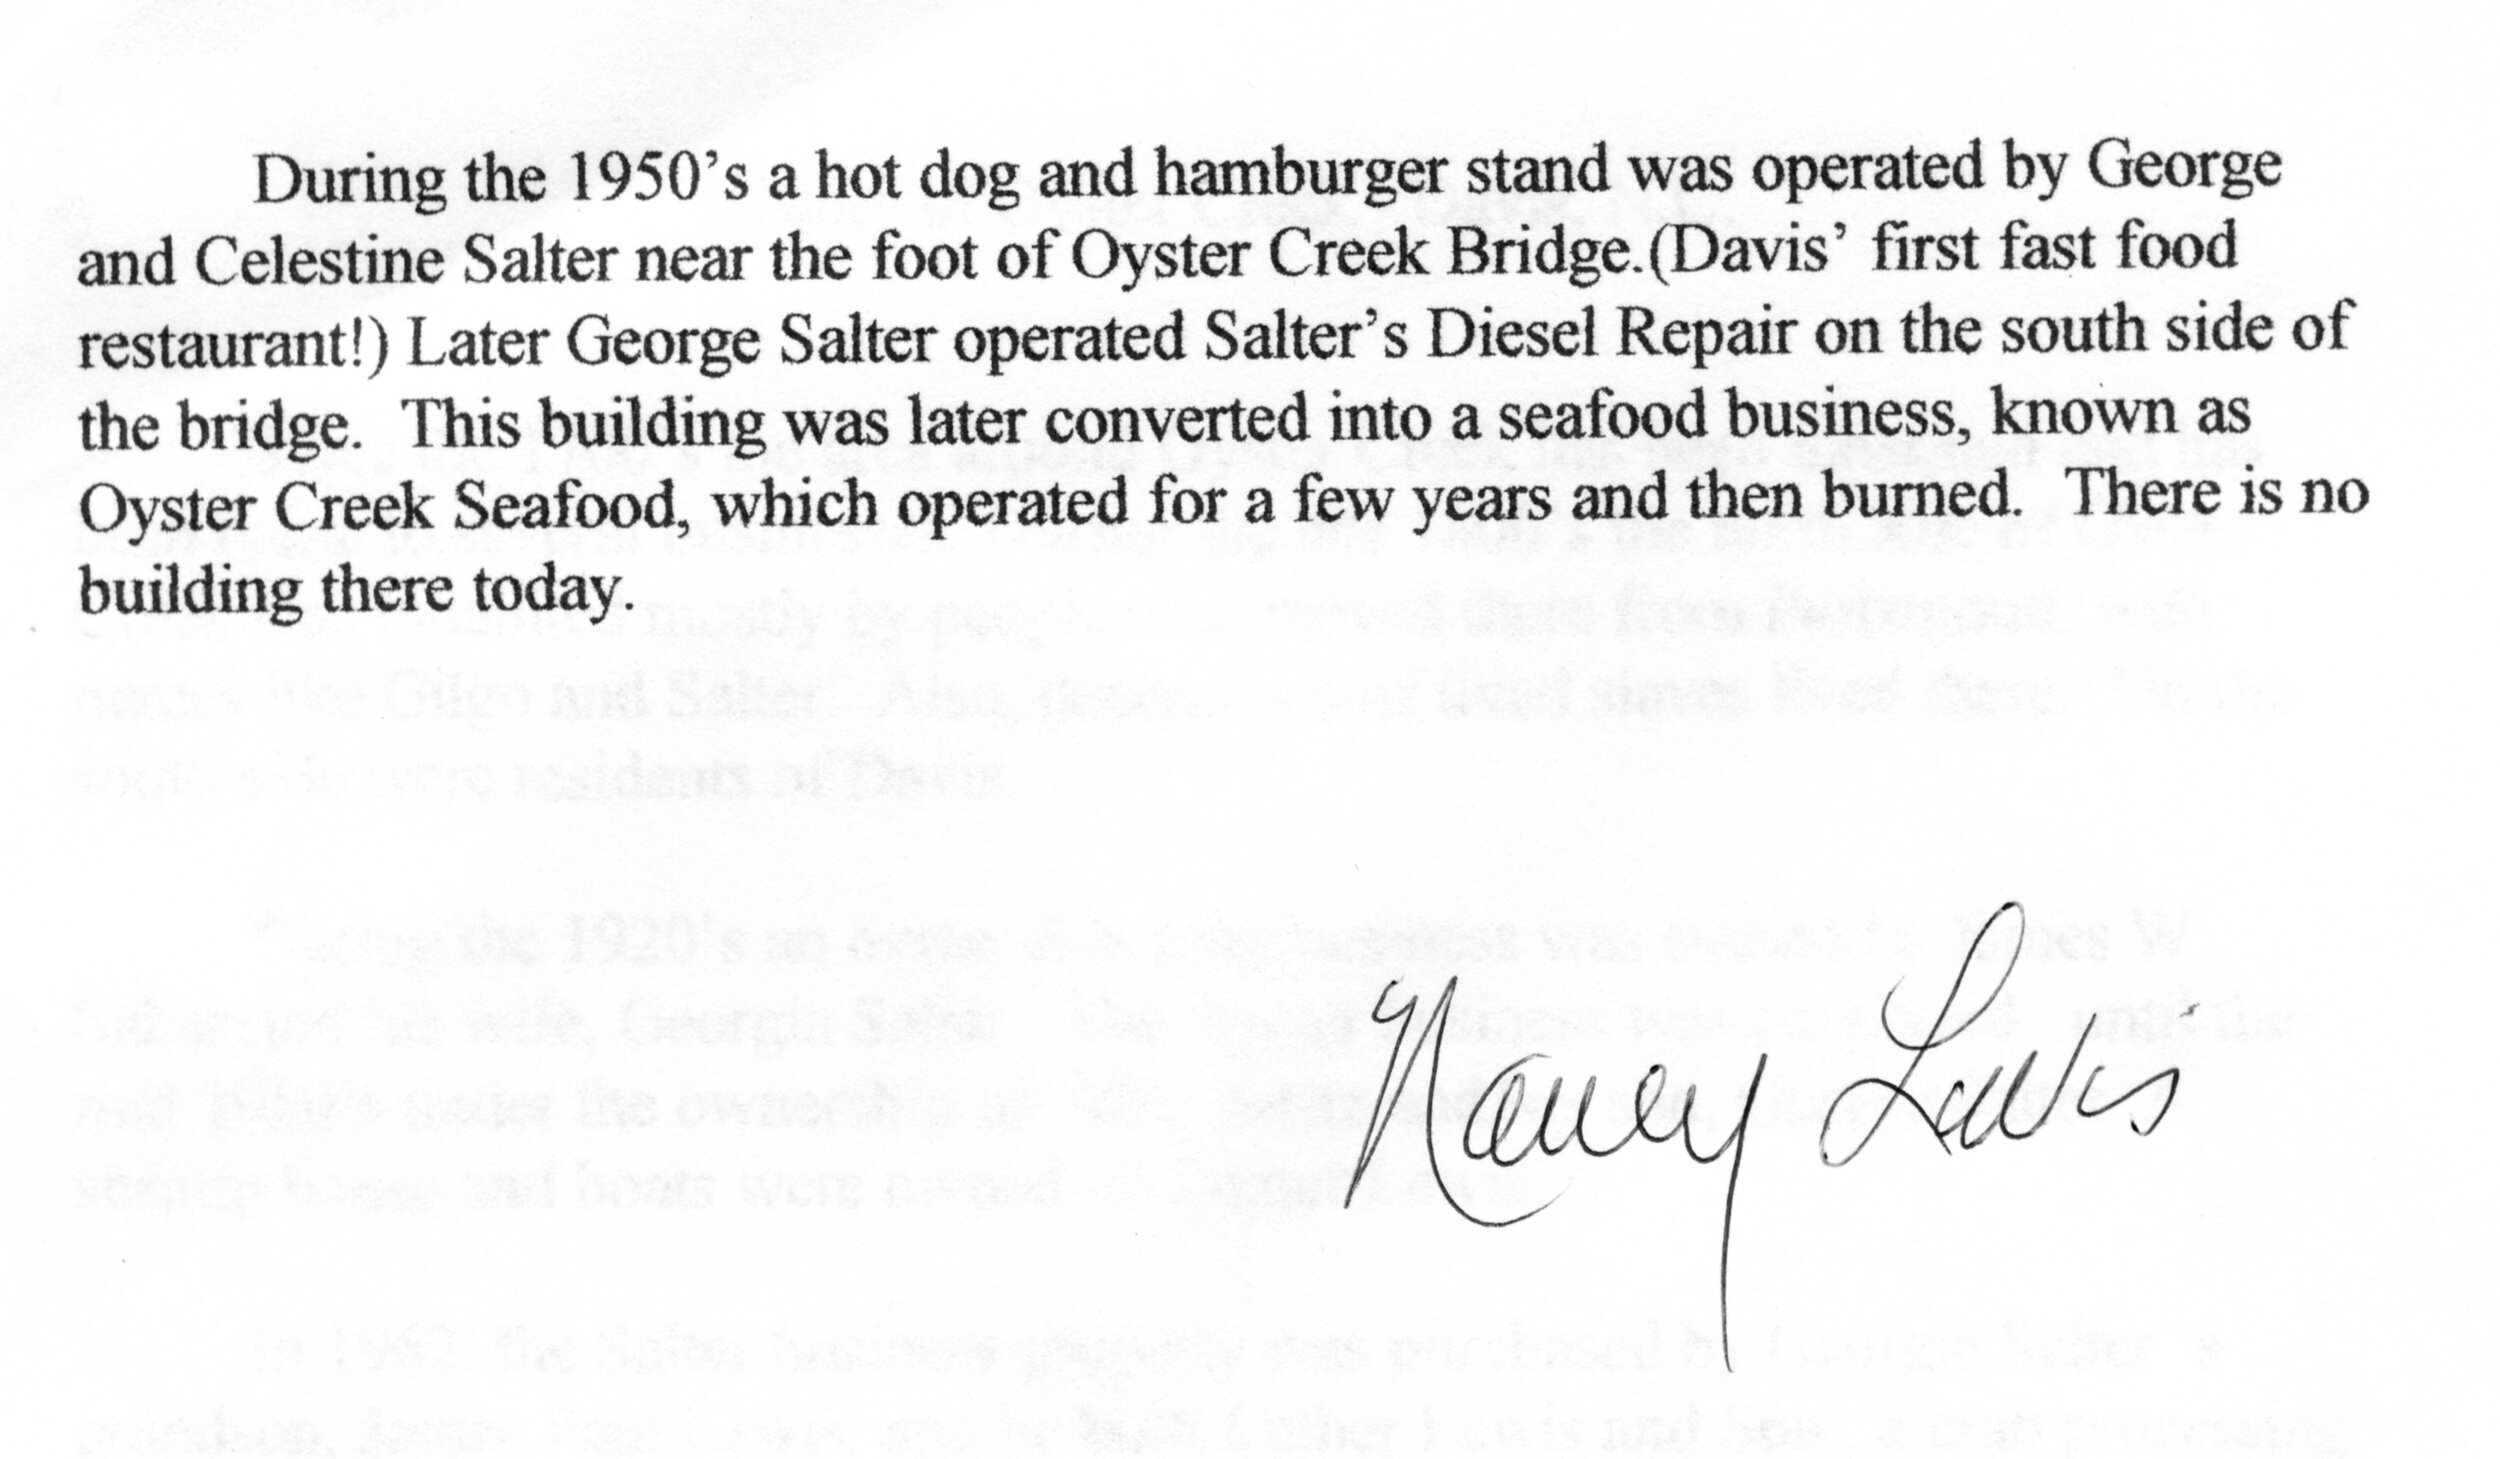 TIA02.VT.013.011 Davis history of Oyster Creeks pp2.jpg